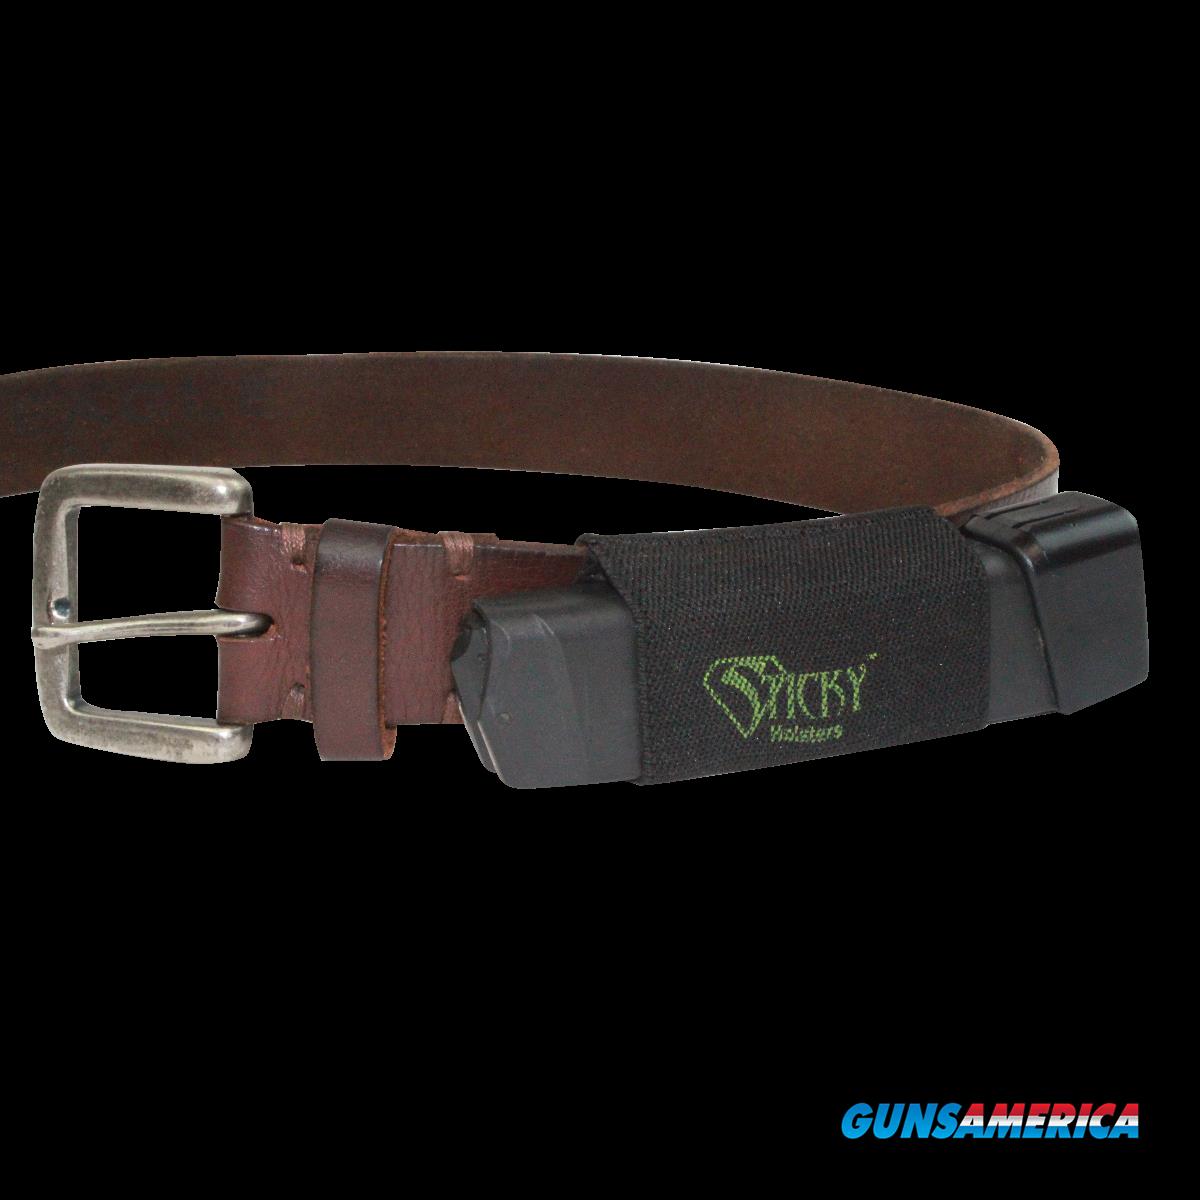 Sticky Holster Belt Slider Carrier for sale at Gunsamerica.com: 926860483